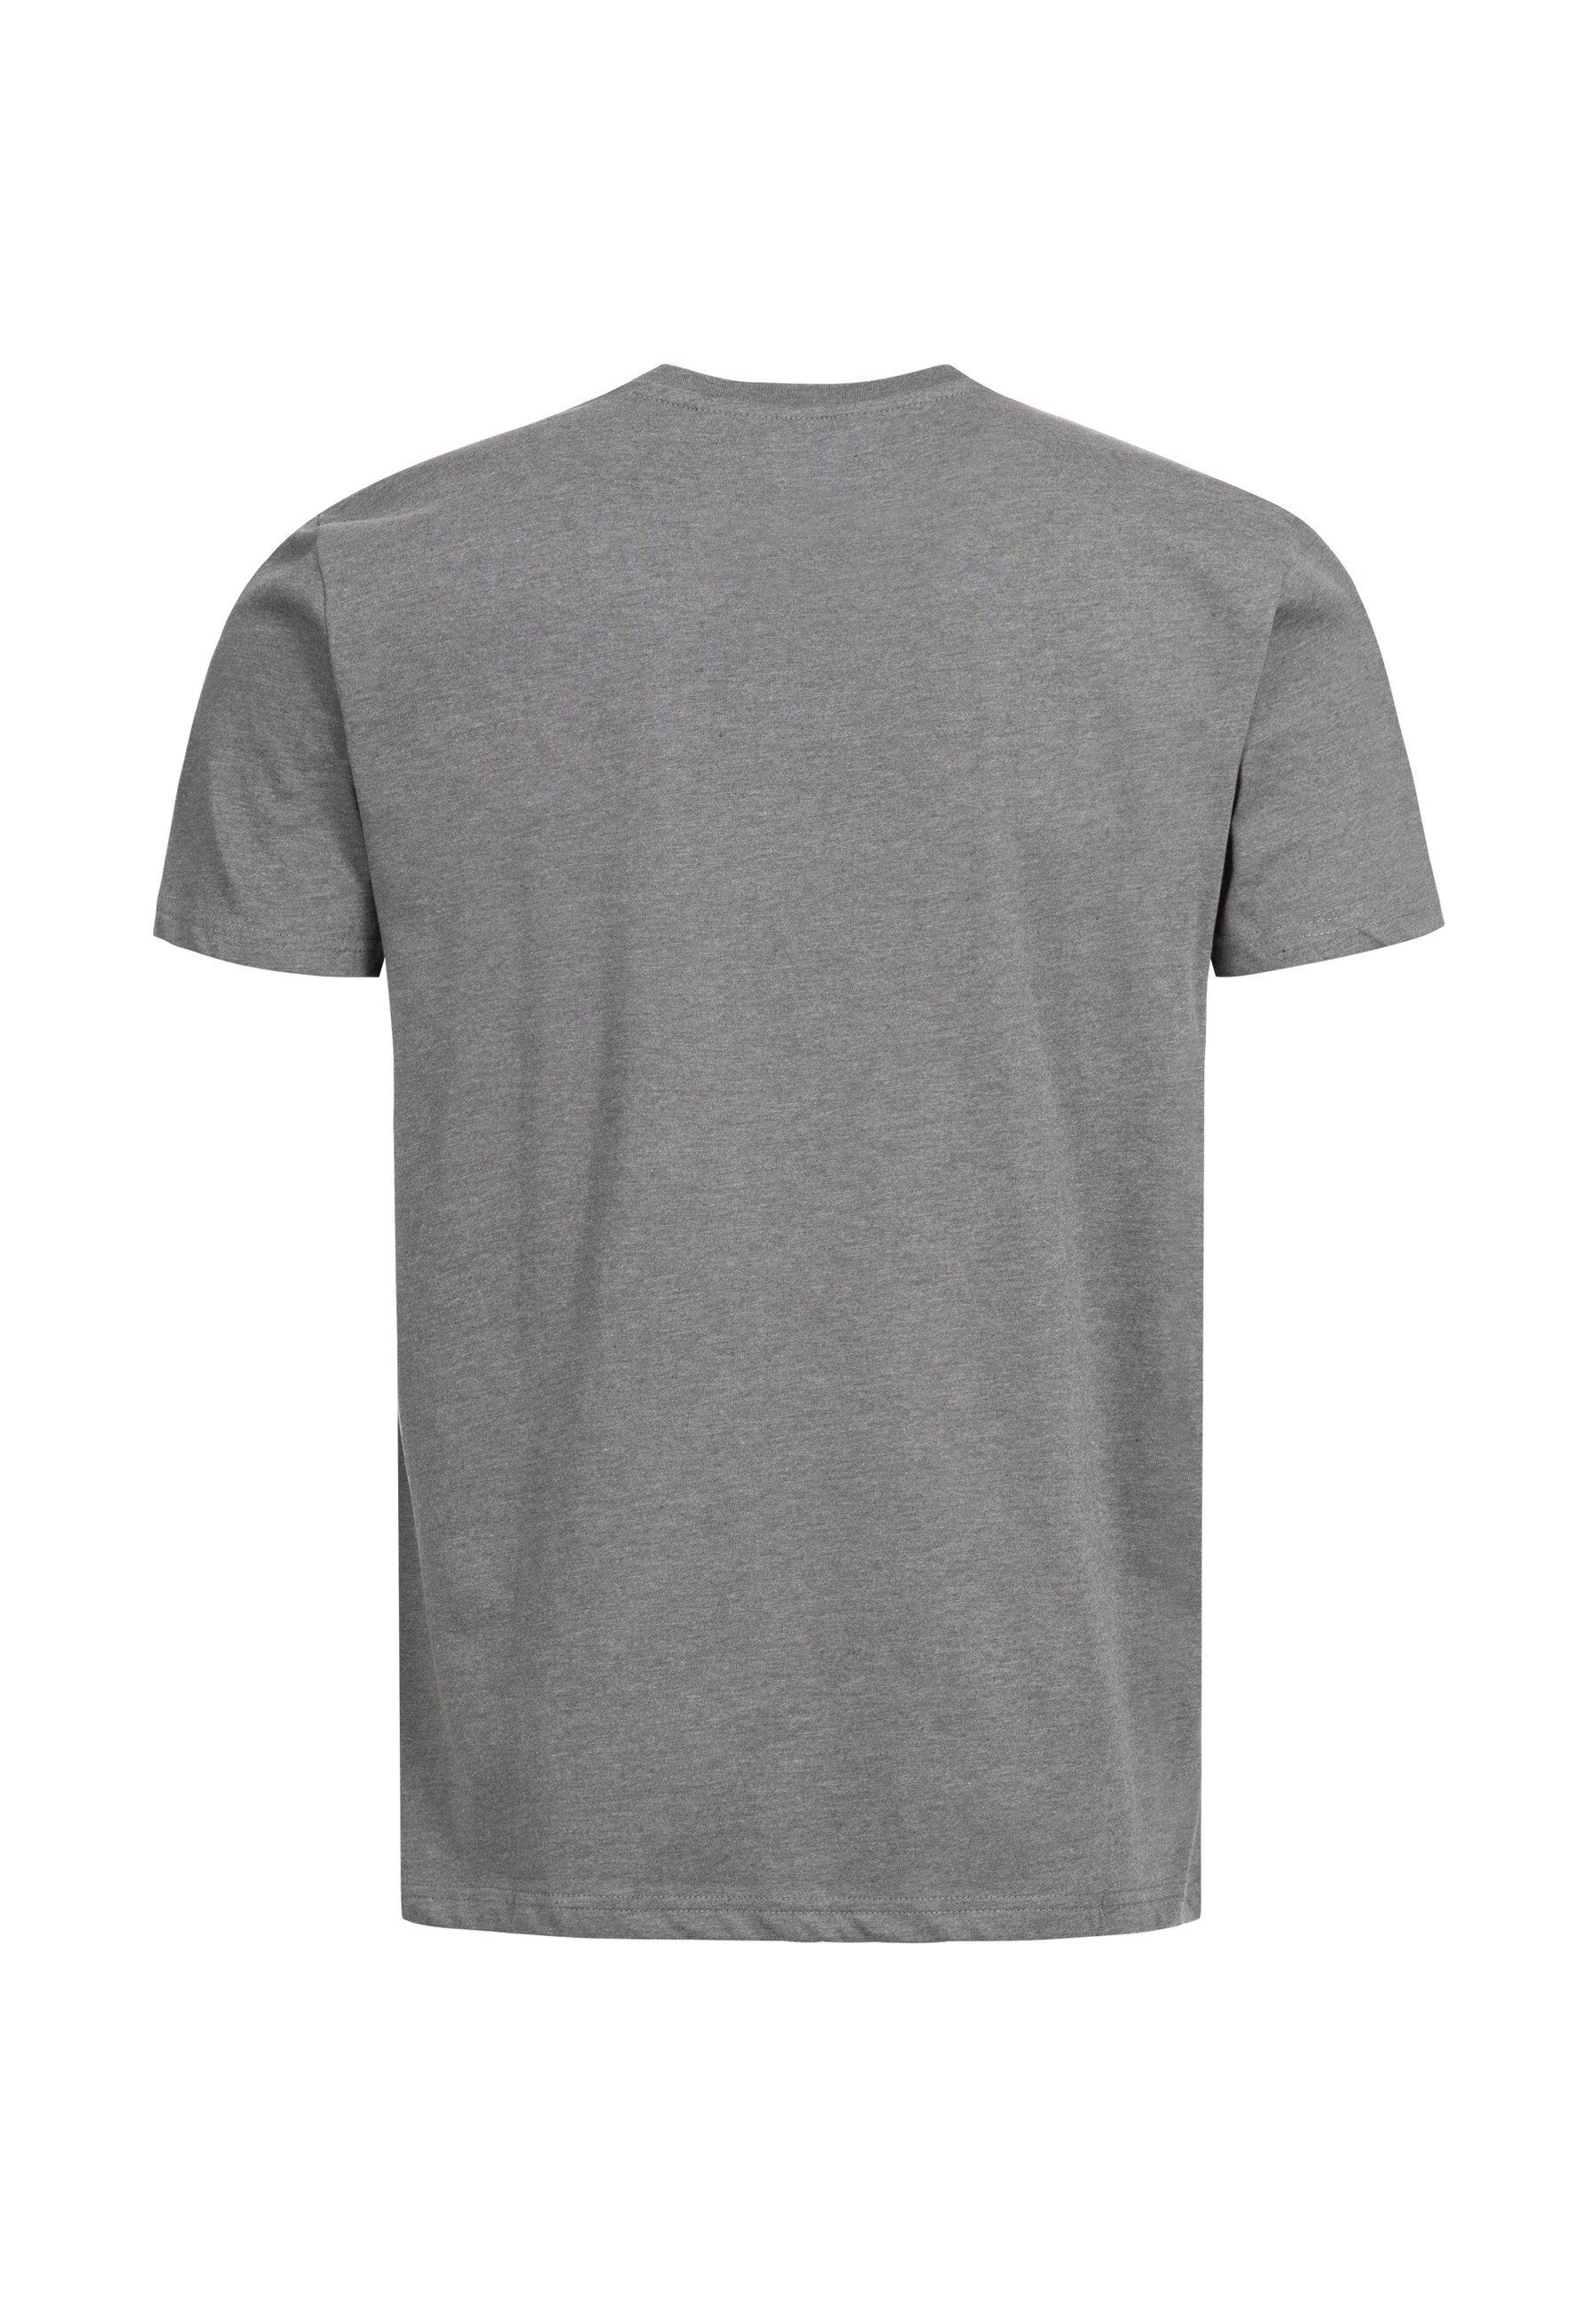 Kurzarm-T-Shirt T-Shirt grau GARGRAVE Shirt Lonsdale mit